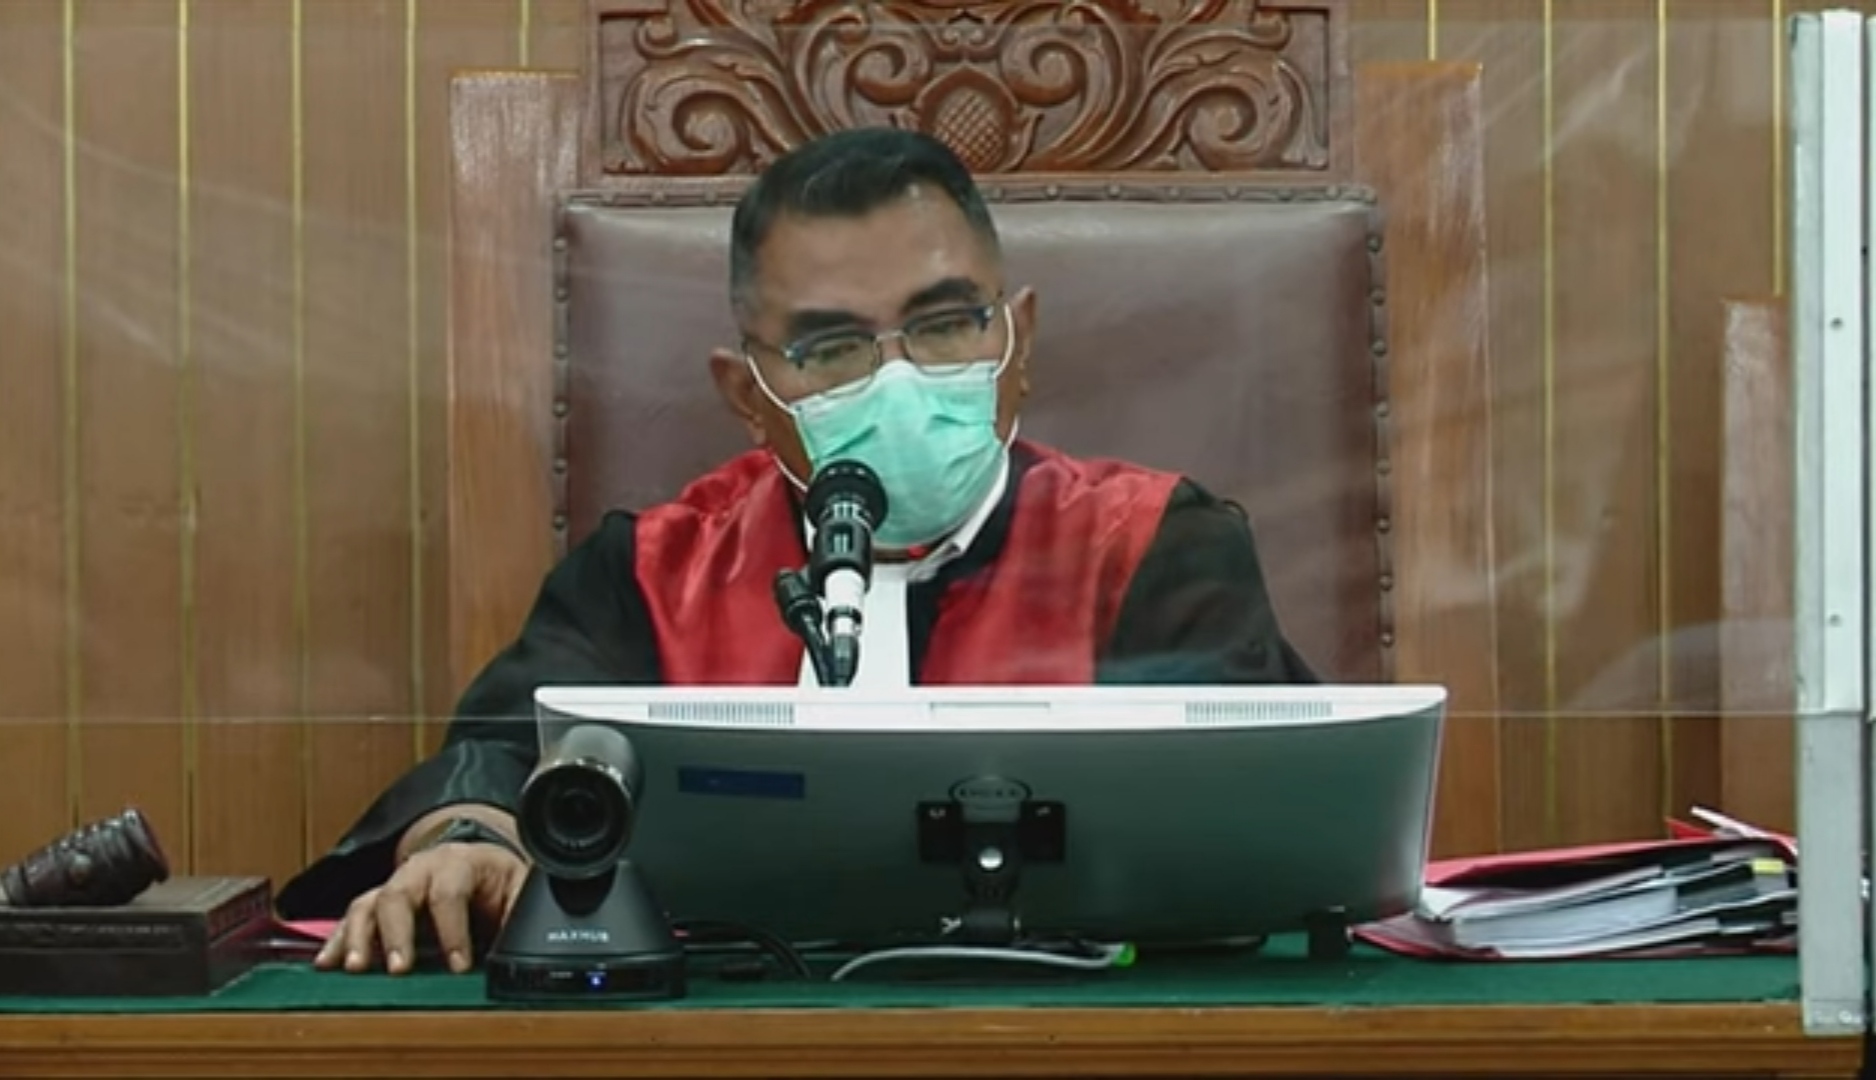 Mahkamah Agung Turunkan Tim Untuk Periksa Video Skandal Hakim Wahyu Iman Santoso